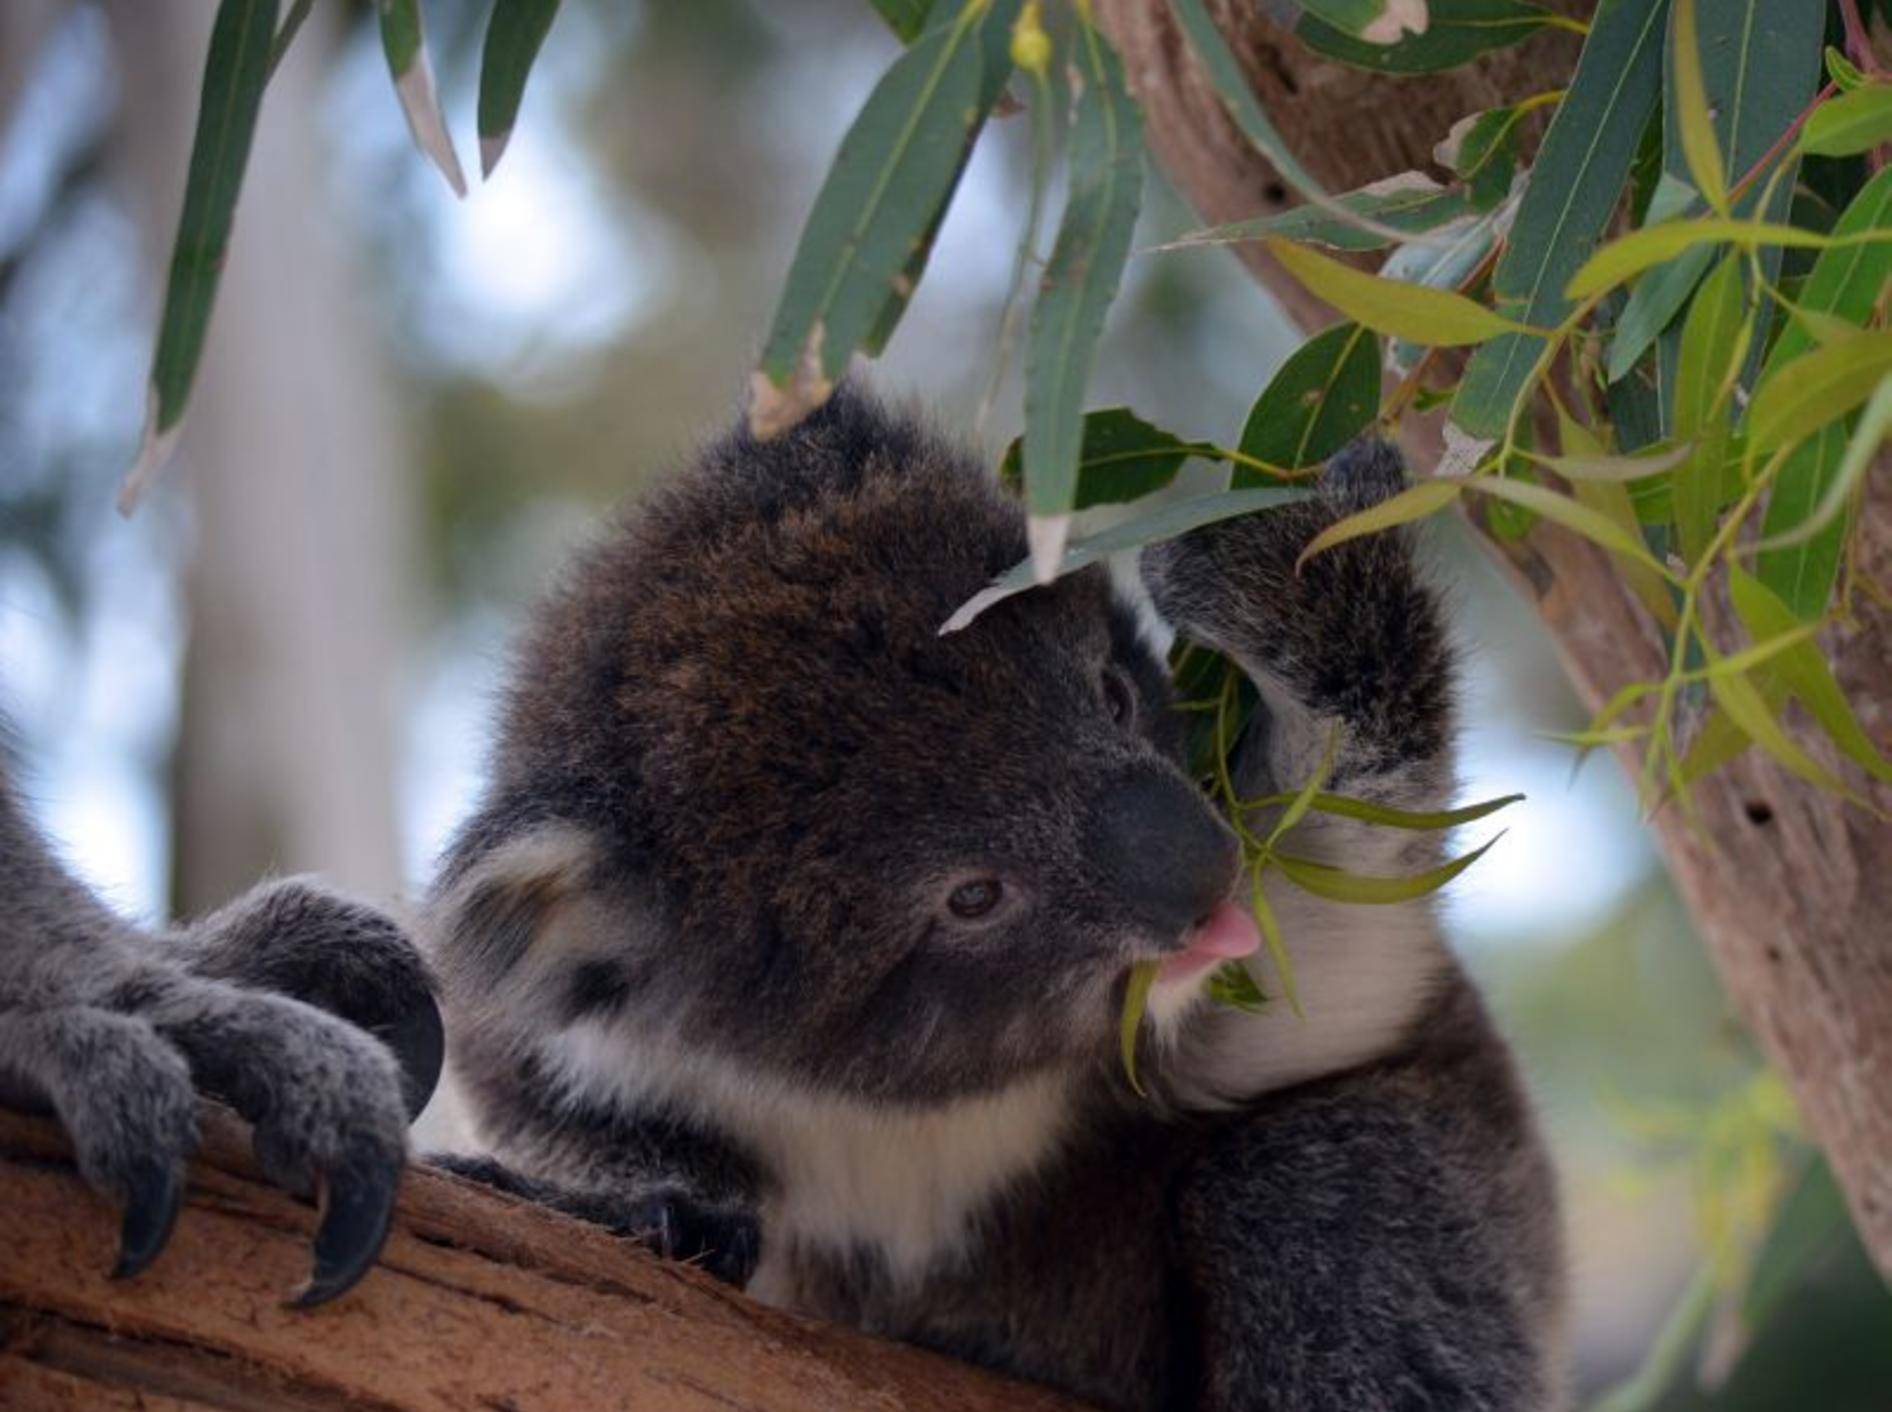 Man muss den Koala einfach mögen, weil er so süß beim Essen aussieht — Bild: Shutterstock / Susan Flashman